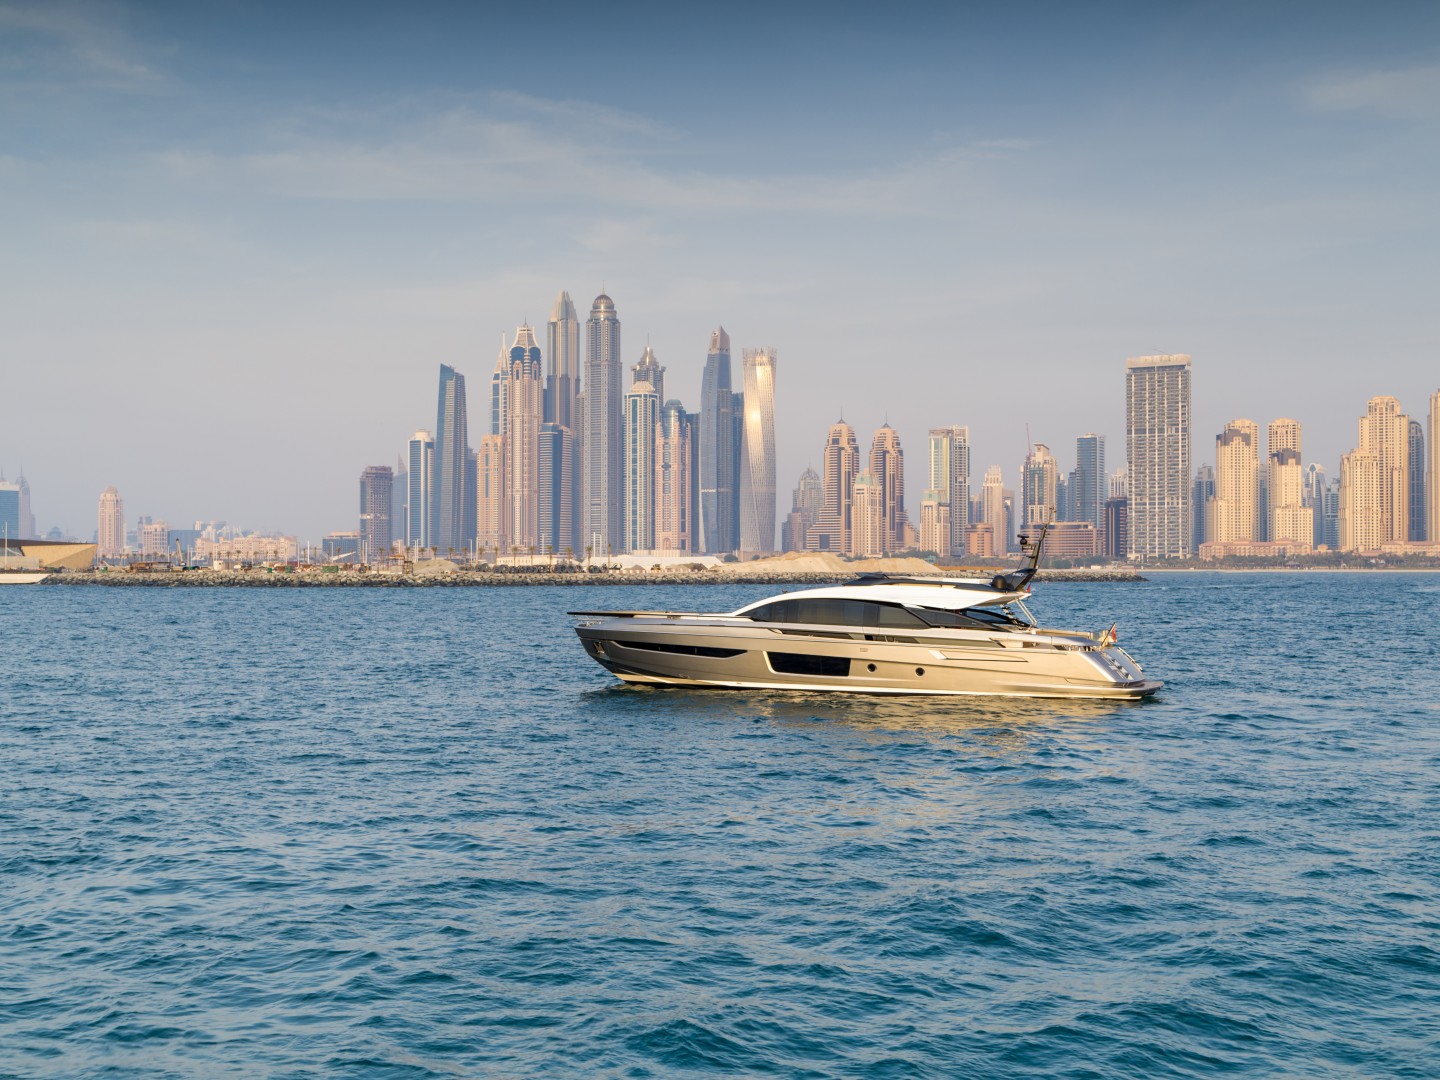 Azimut will take part at Dubai International Boat Show 2022